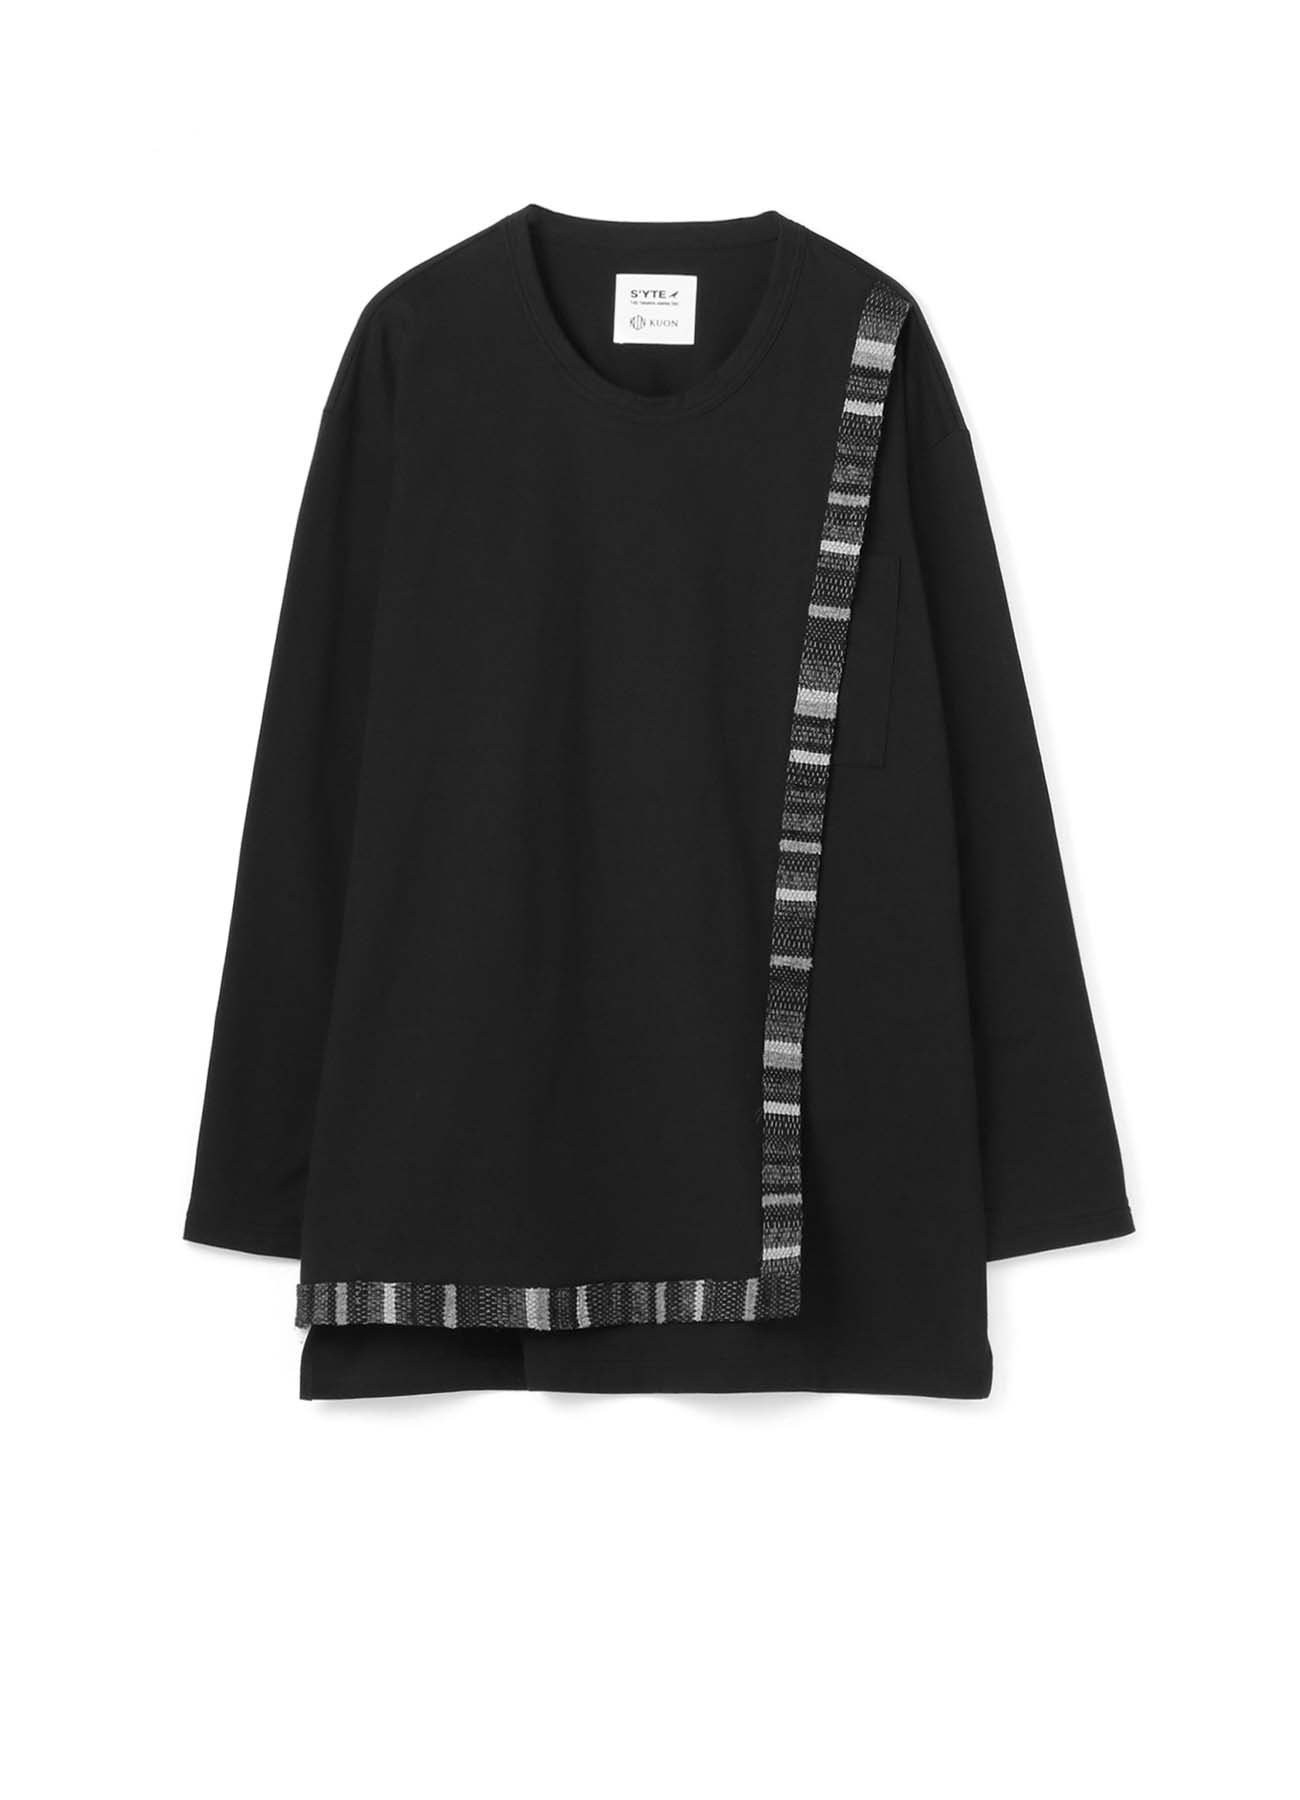 S’YTE×KUON Cotton Jersey Saccora Sakiori Crew Neck Half-Layered Long Sleeve T-Shirt